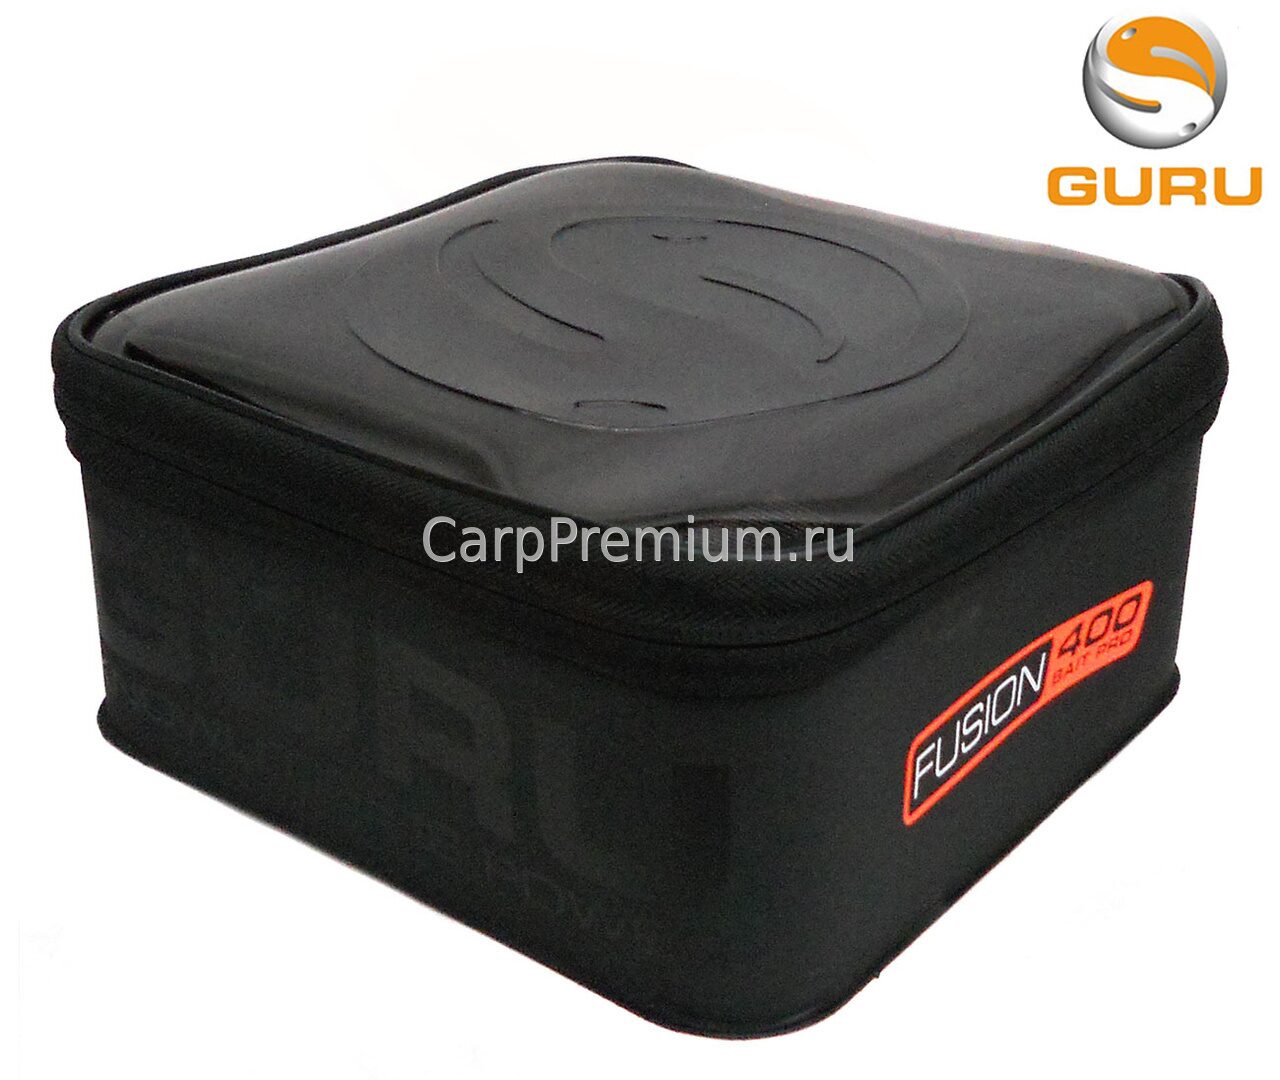 Набор коробок Guru (Гуру) - Bait Pro 300 + 400 Combo, 2 шт